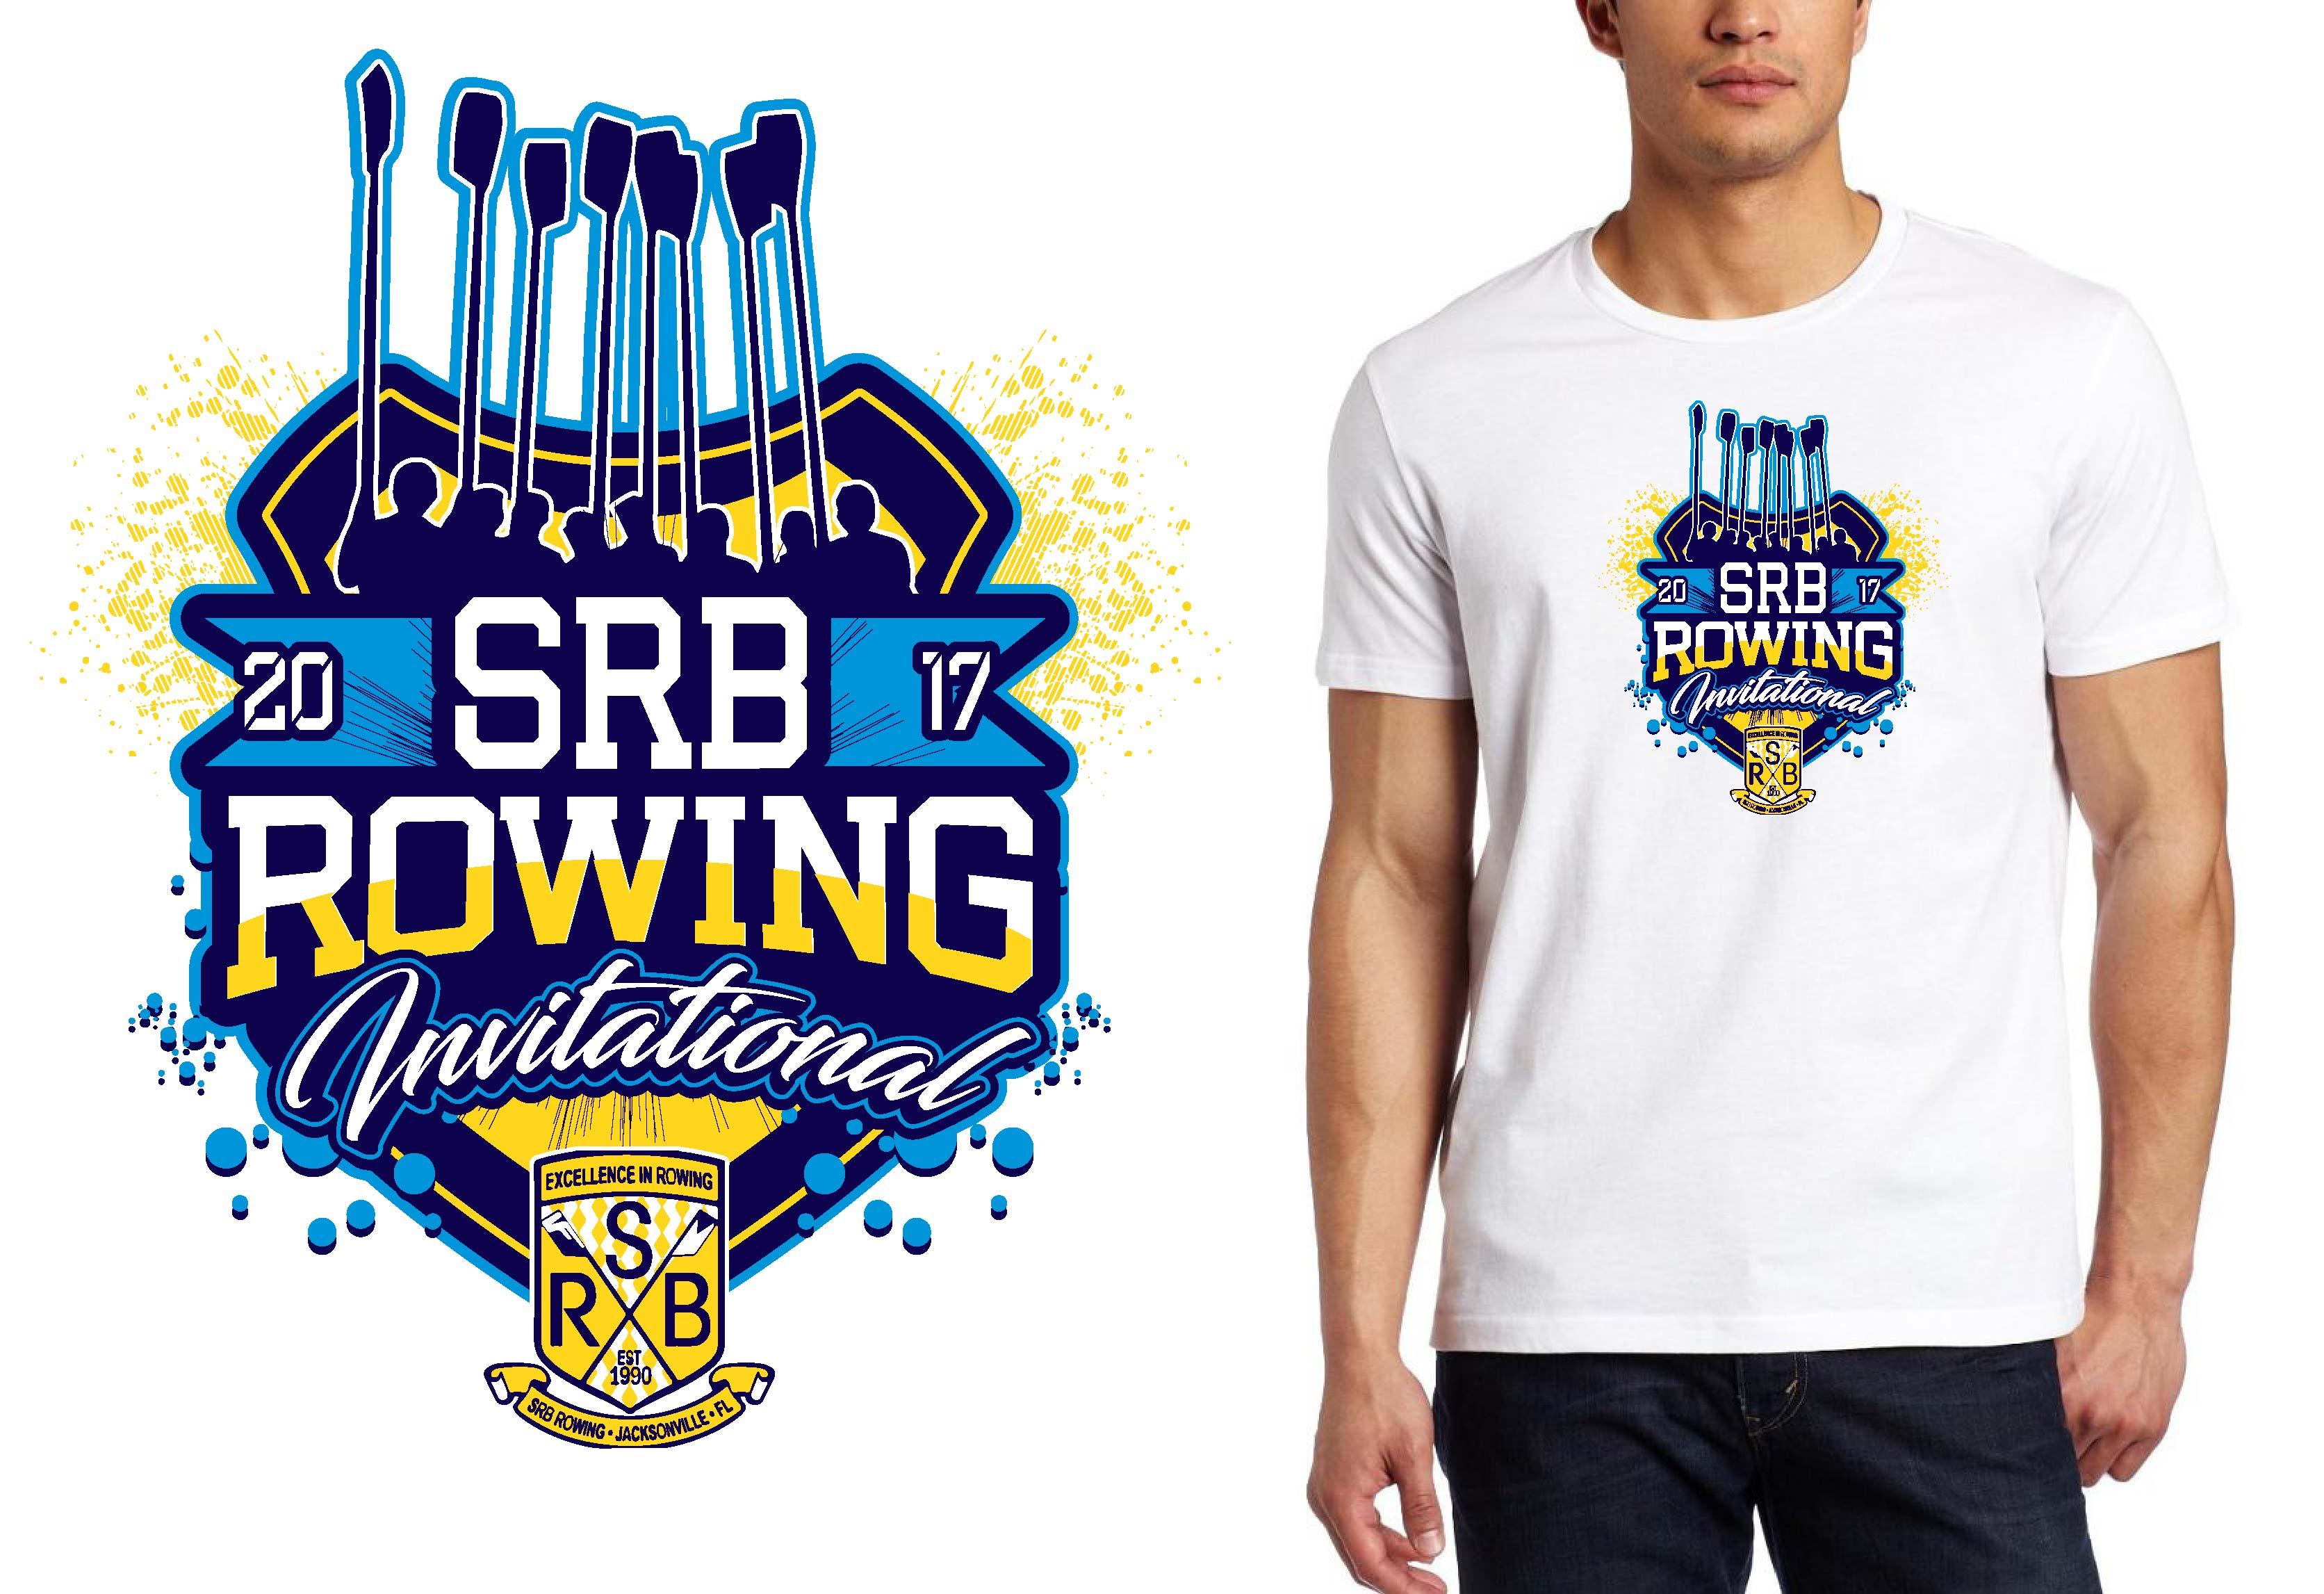 SRB Logo - ROWING REGATTA TSHIRT LOGO DESIGN SRB-Rowing-Invitational ...